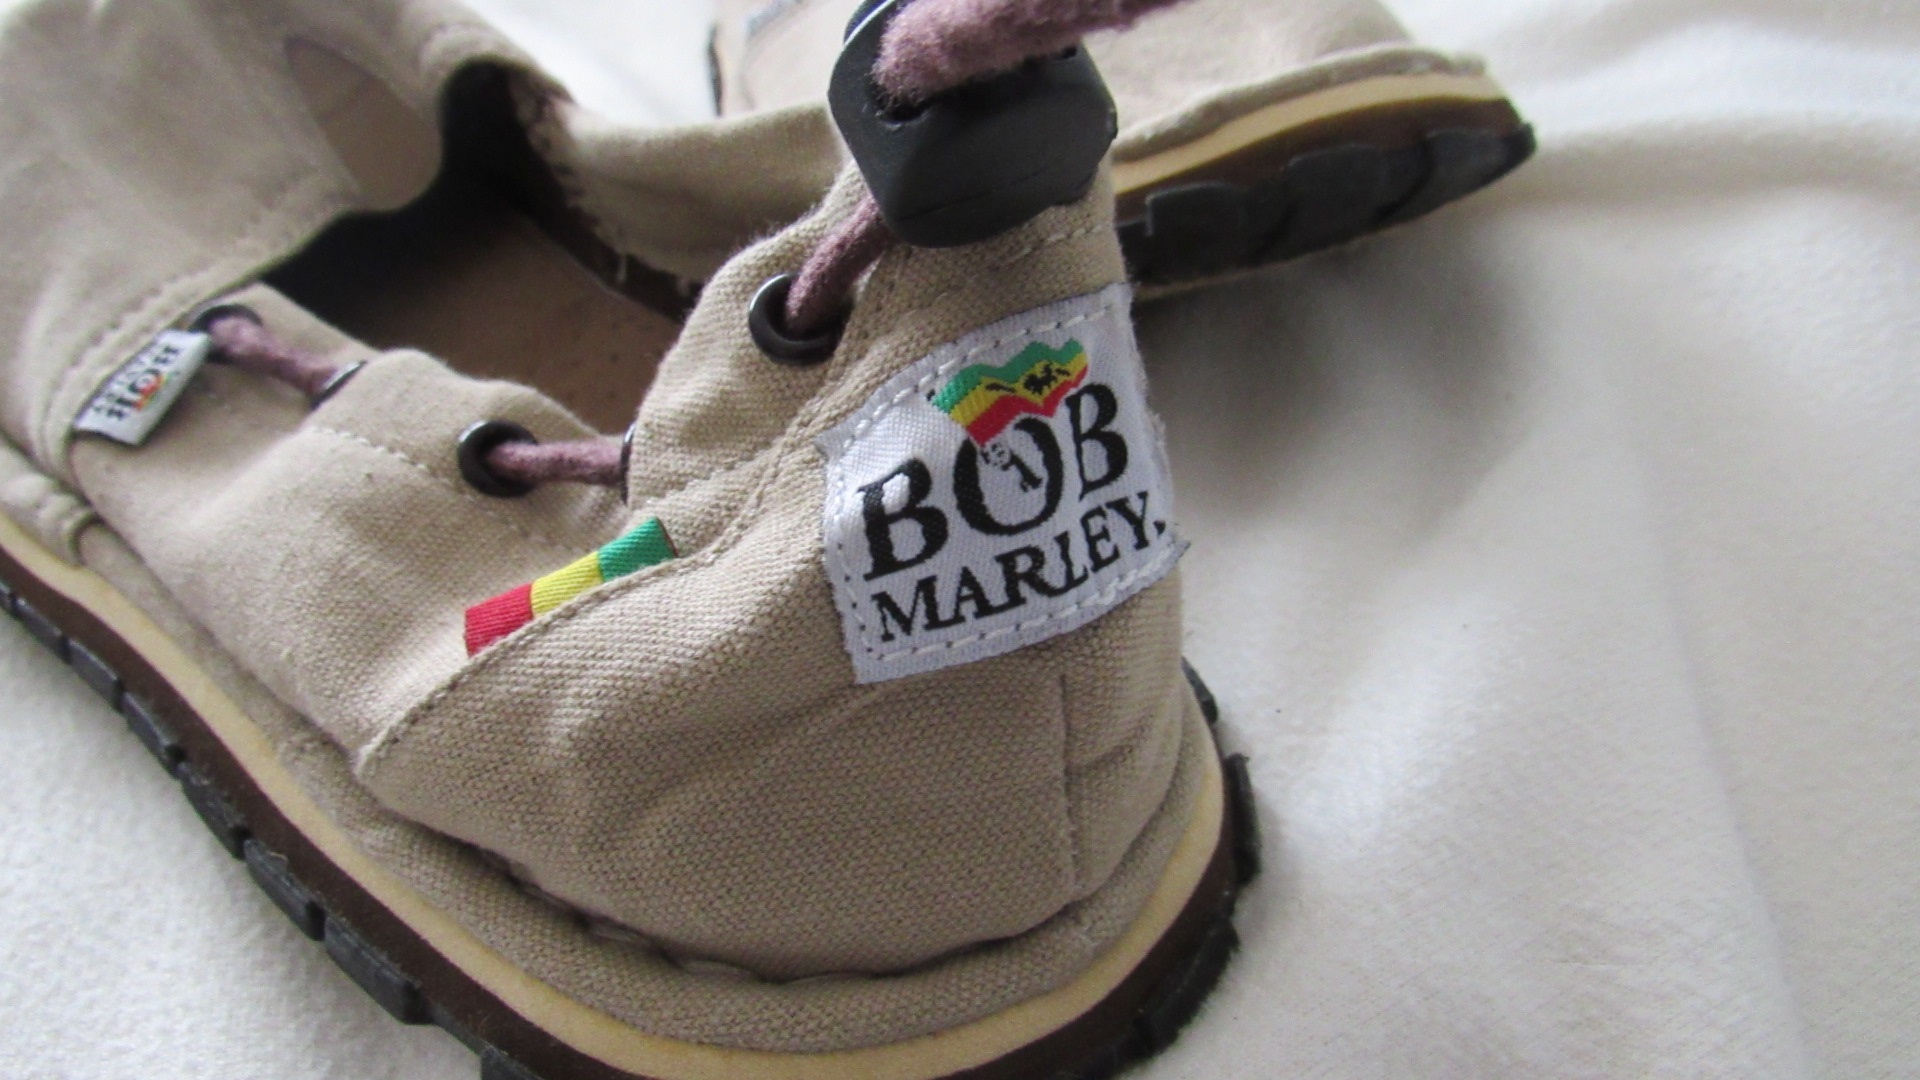 Bob Marley Men's Beach Shoes.